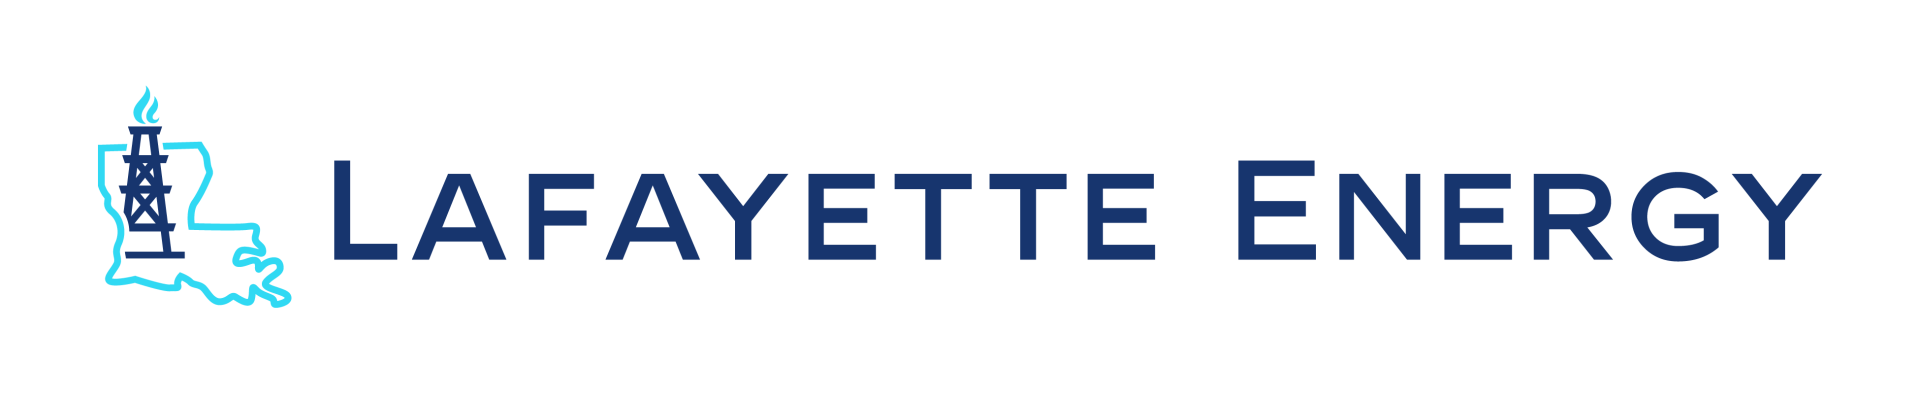 Lafayette Energy Corporation Logo